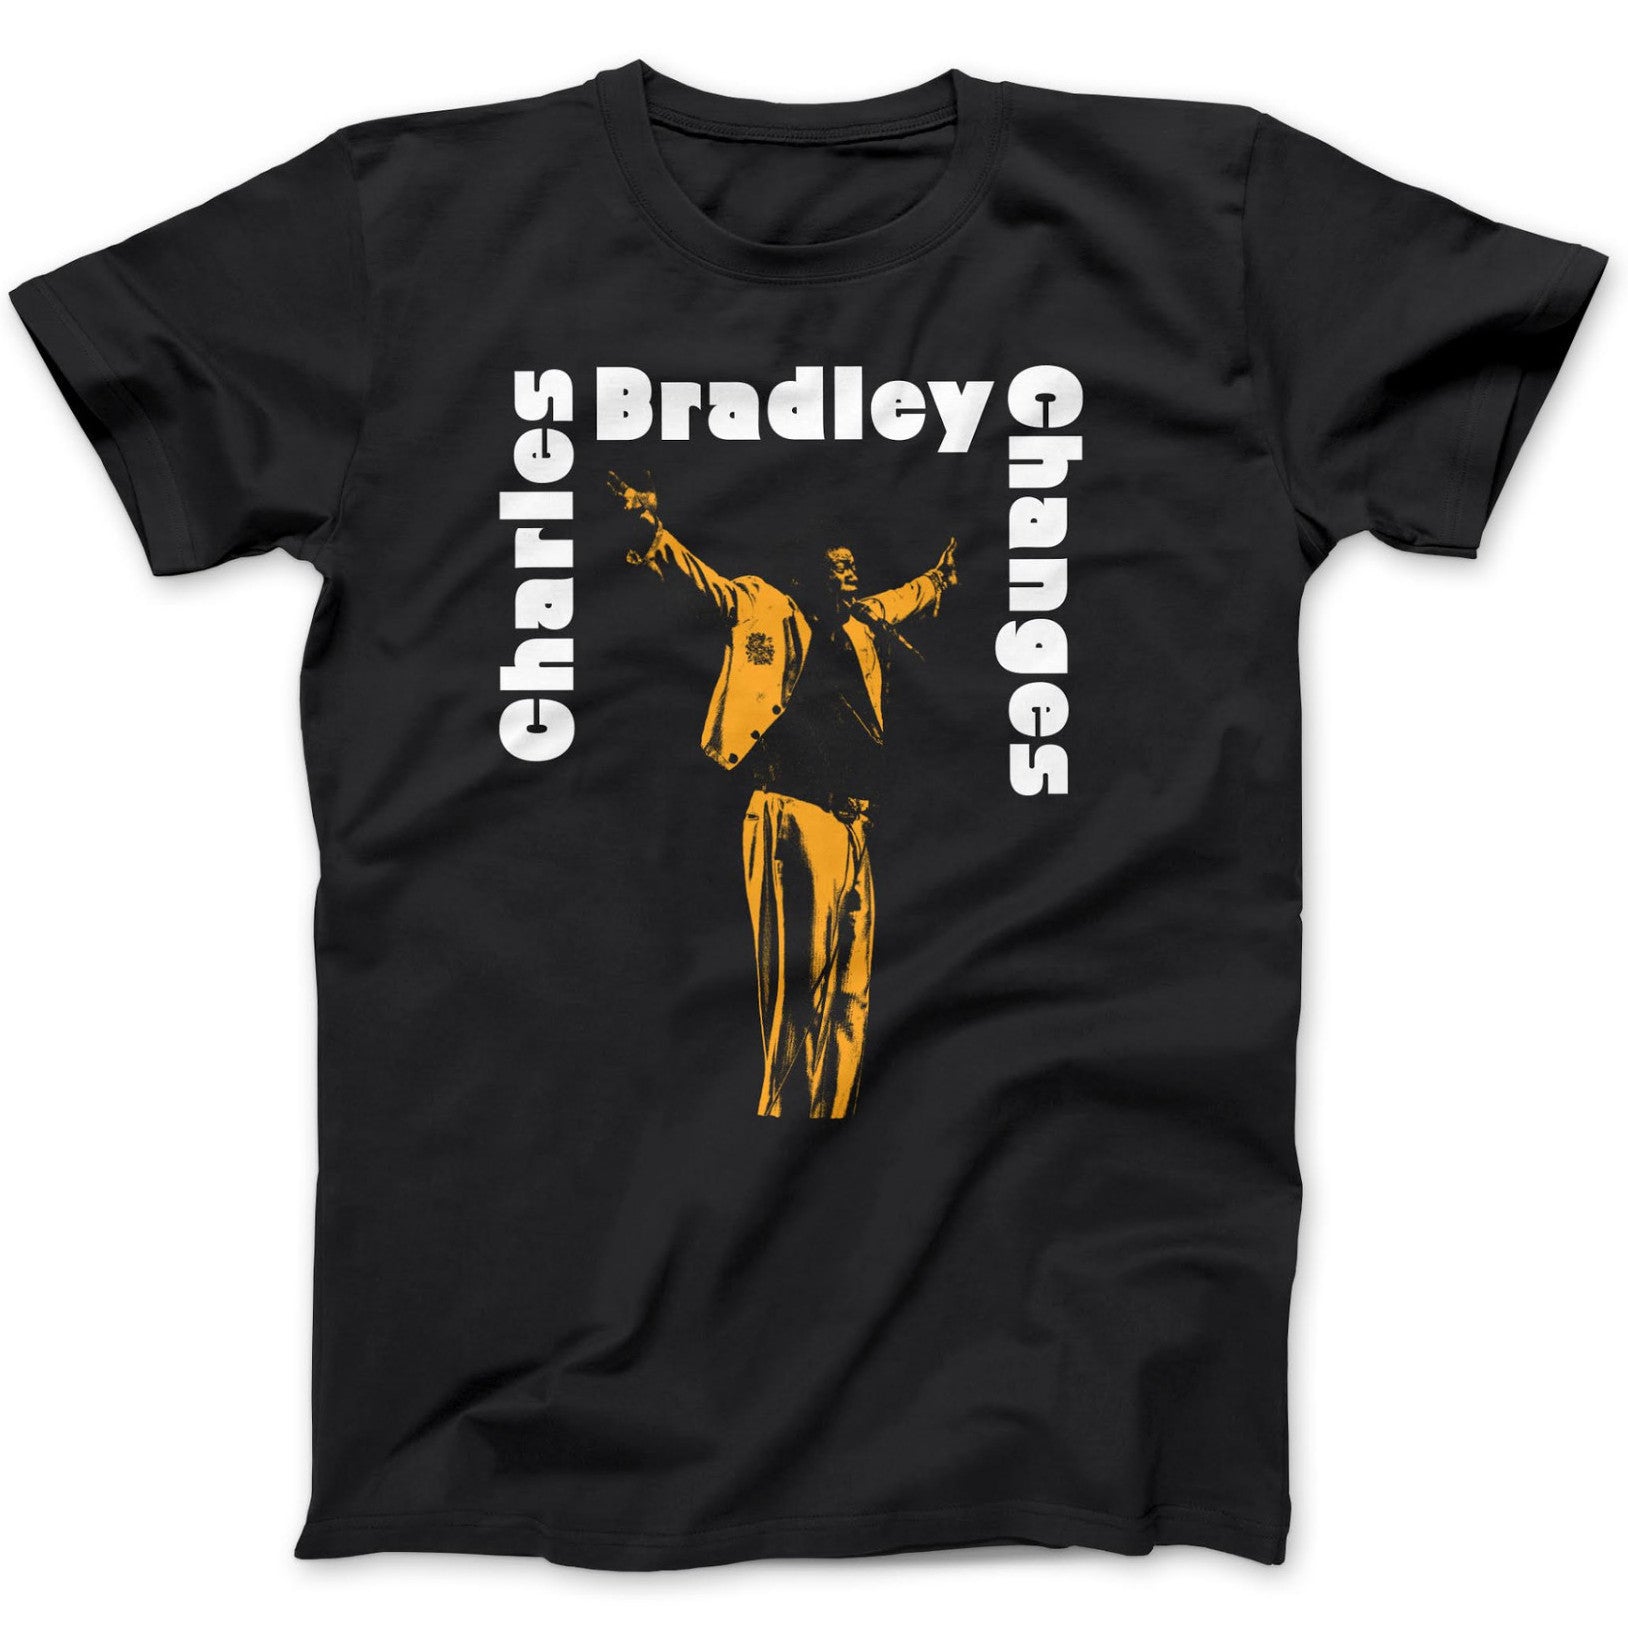 Charles Bradley "Changes" T-shirt - daptonerecords